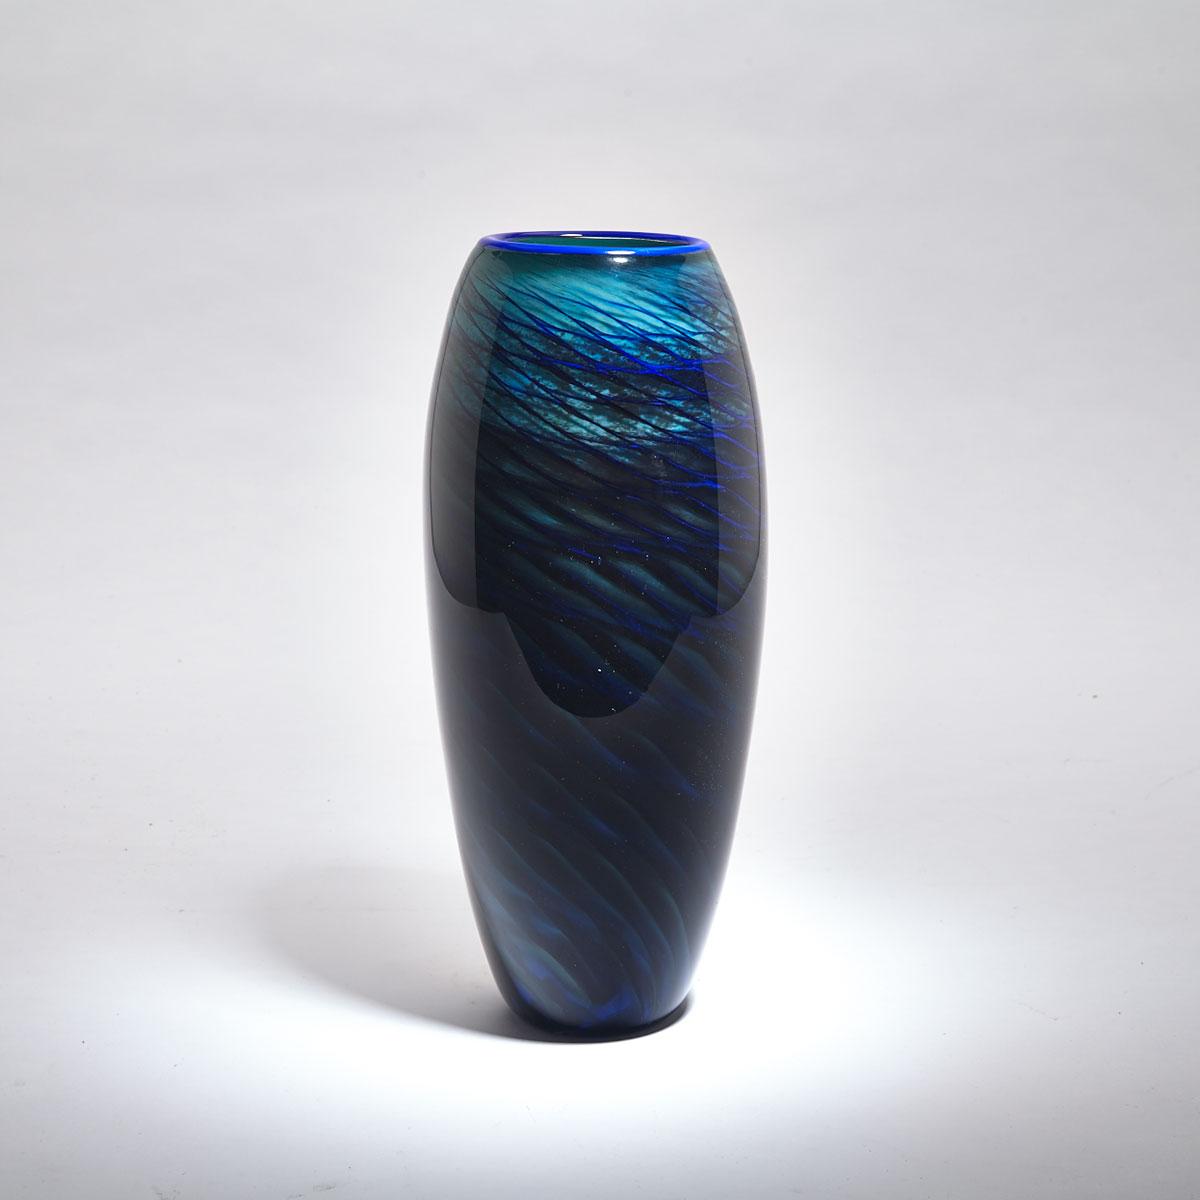 Joseph Pagano (American, b.1965), Internally Decorated Glass Vase, 1990